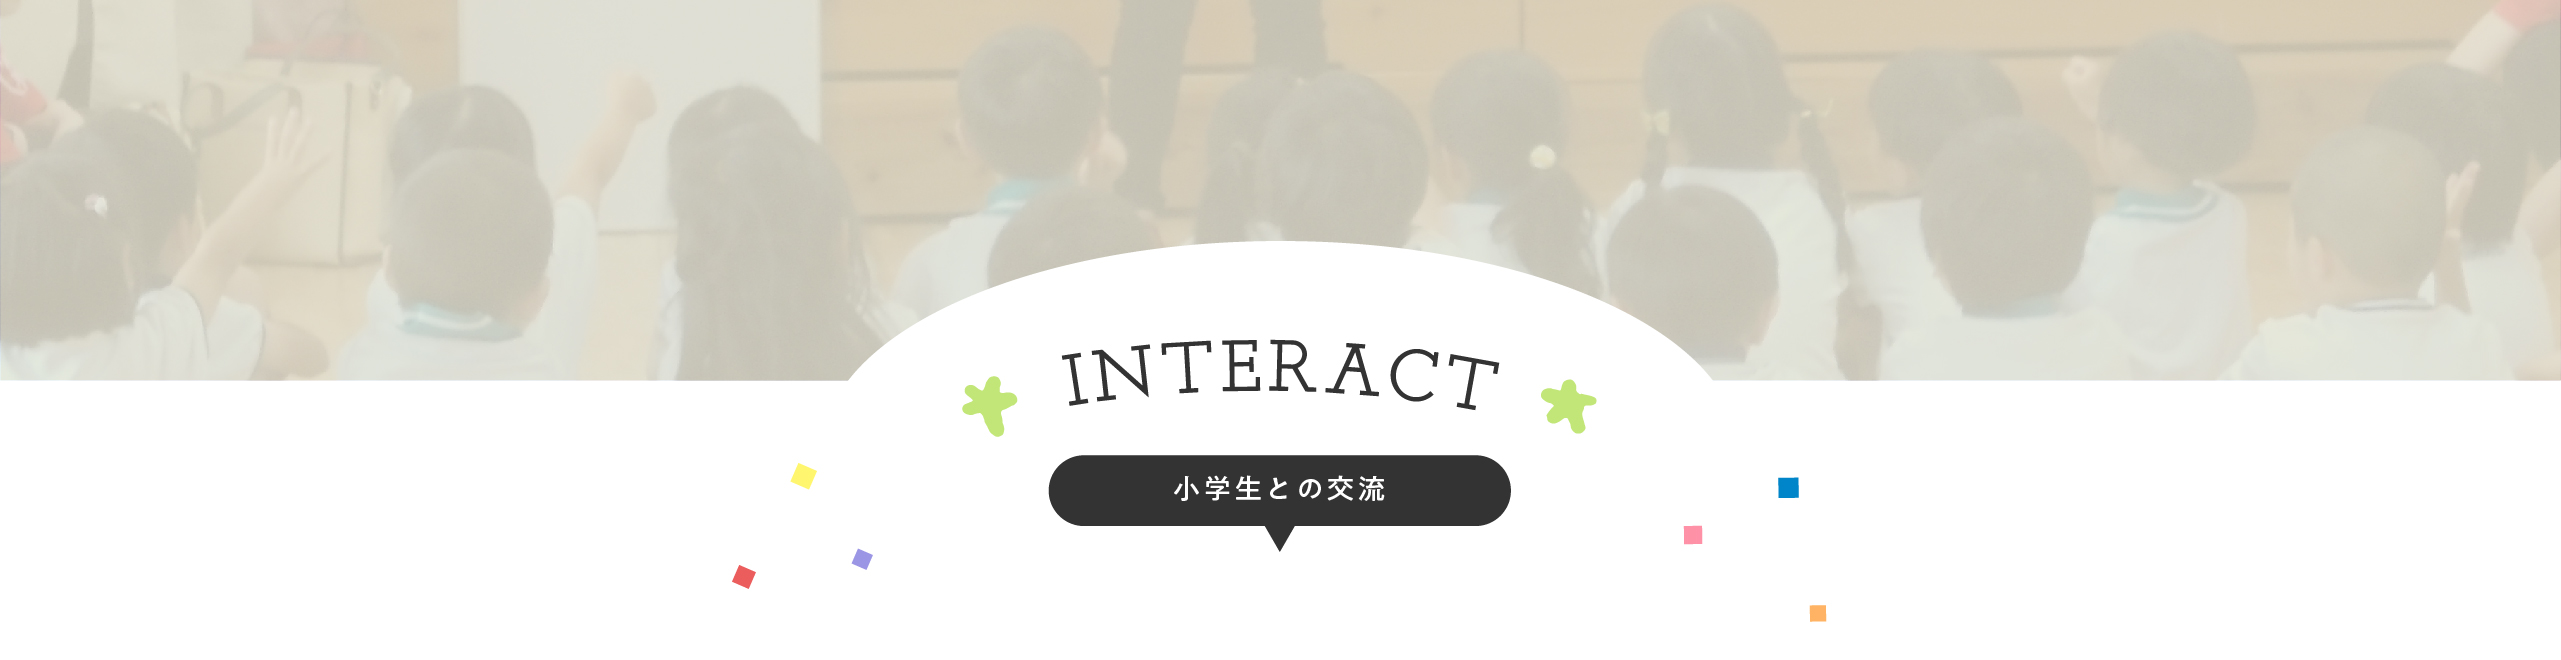 INTERACT -小学生との交流-